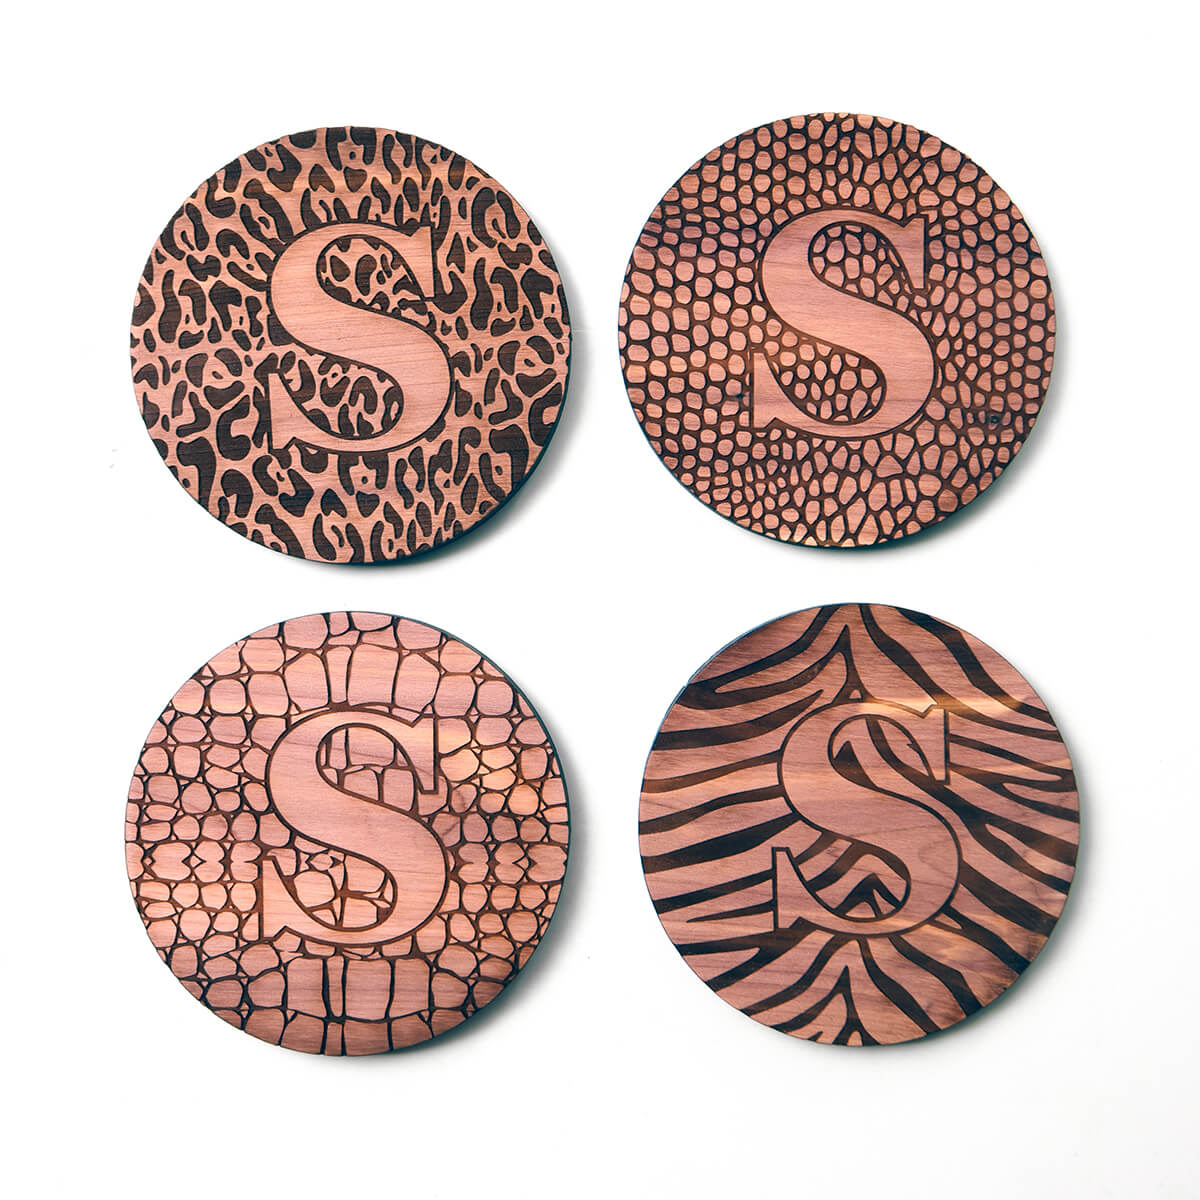 Animal Print Coaster Set, Engraved Wooden Set of 4 Round Coasters